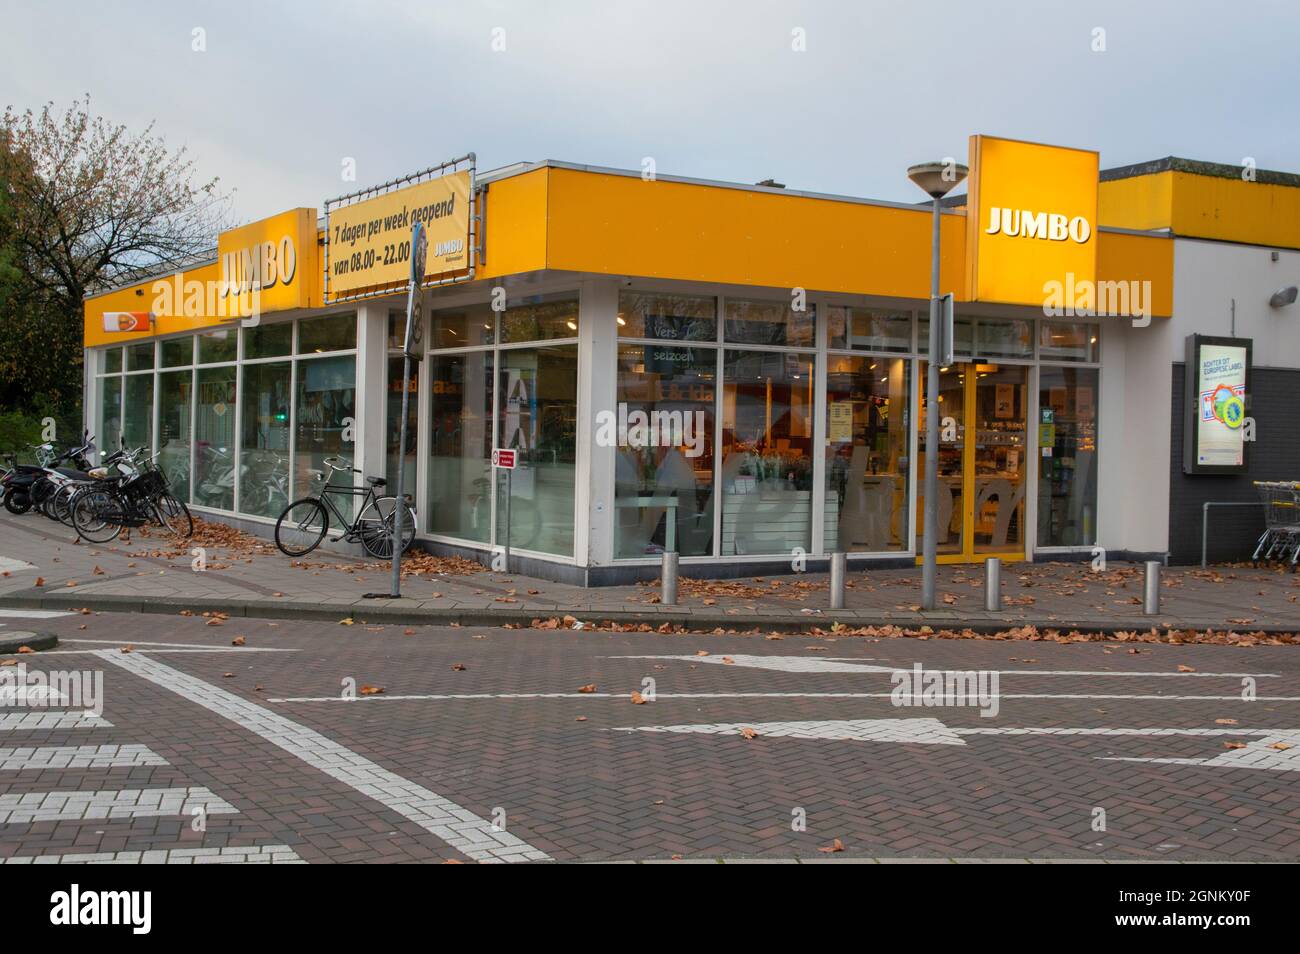 jungle Nevelig omzeilen Outdoors At The Jumbo Amsterdam The Netherlands 2019 Stock Photo - Alamy